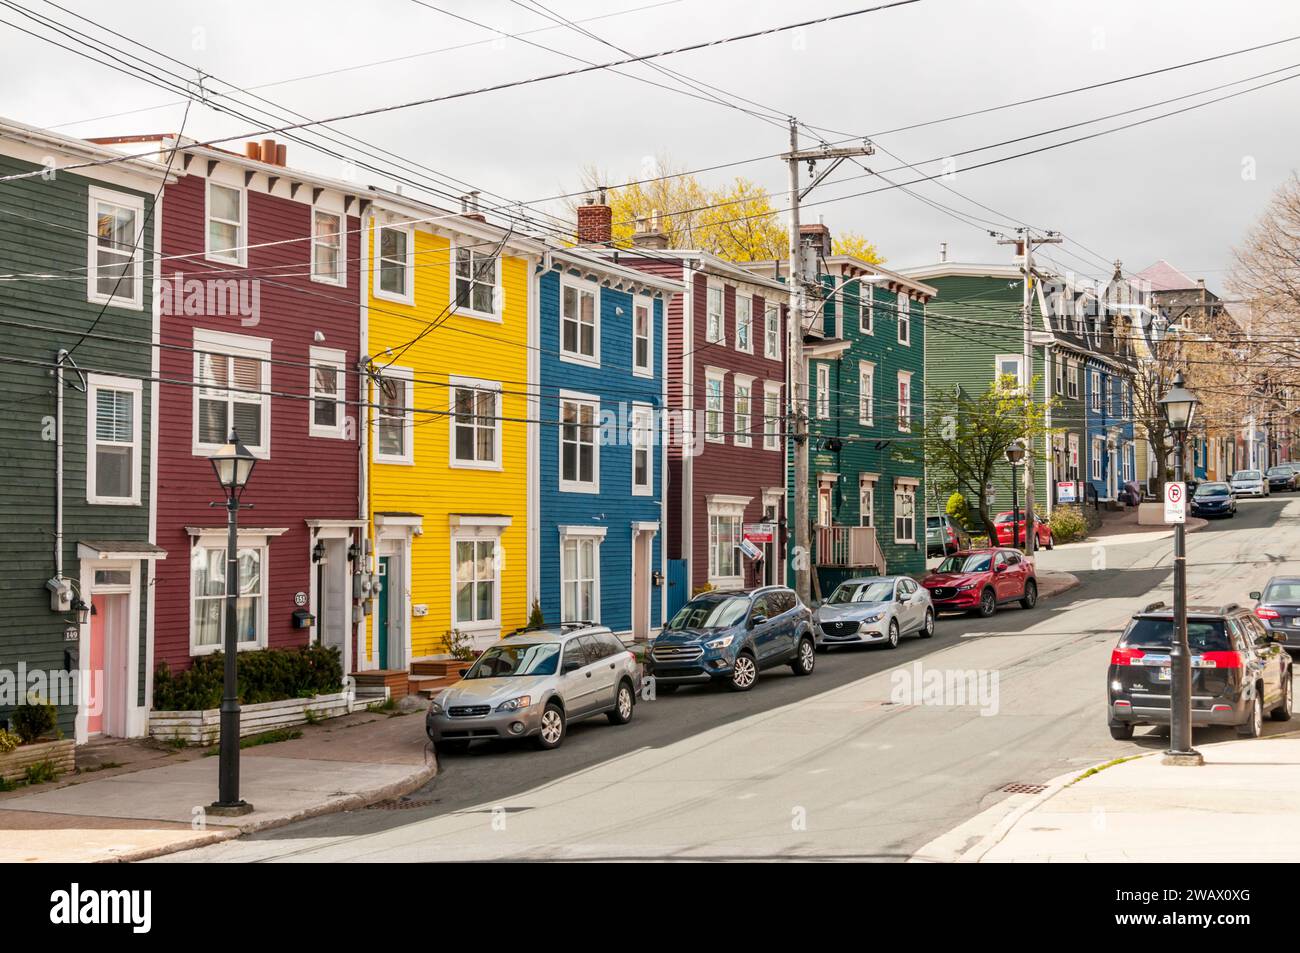 Jellybean Row or colourful houses on Gower Street in St John's, Newfoundland Stock Photo